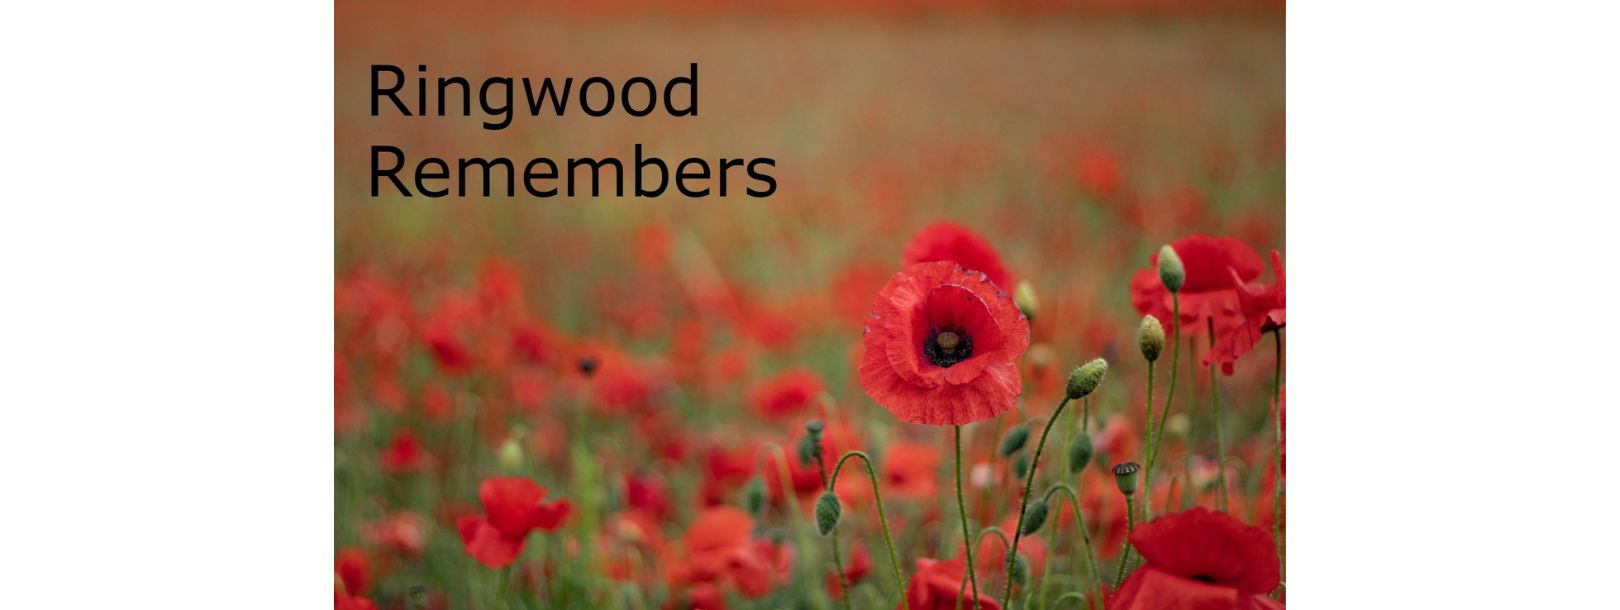 Ringwood Remembers